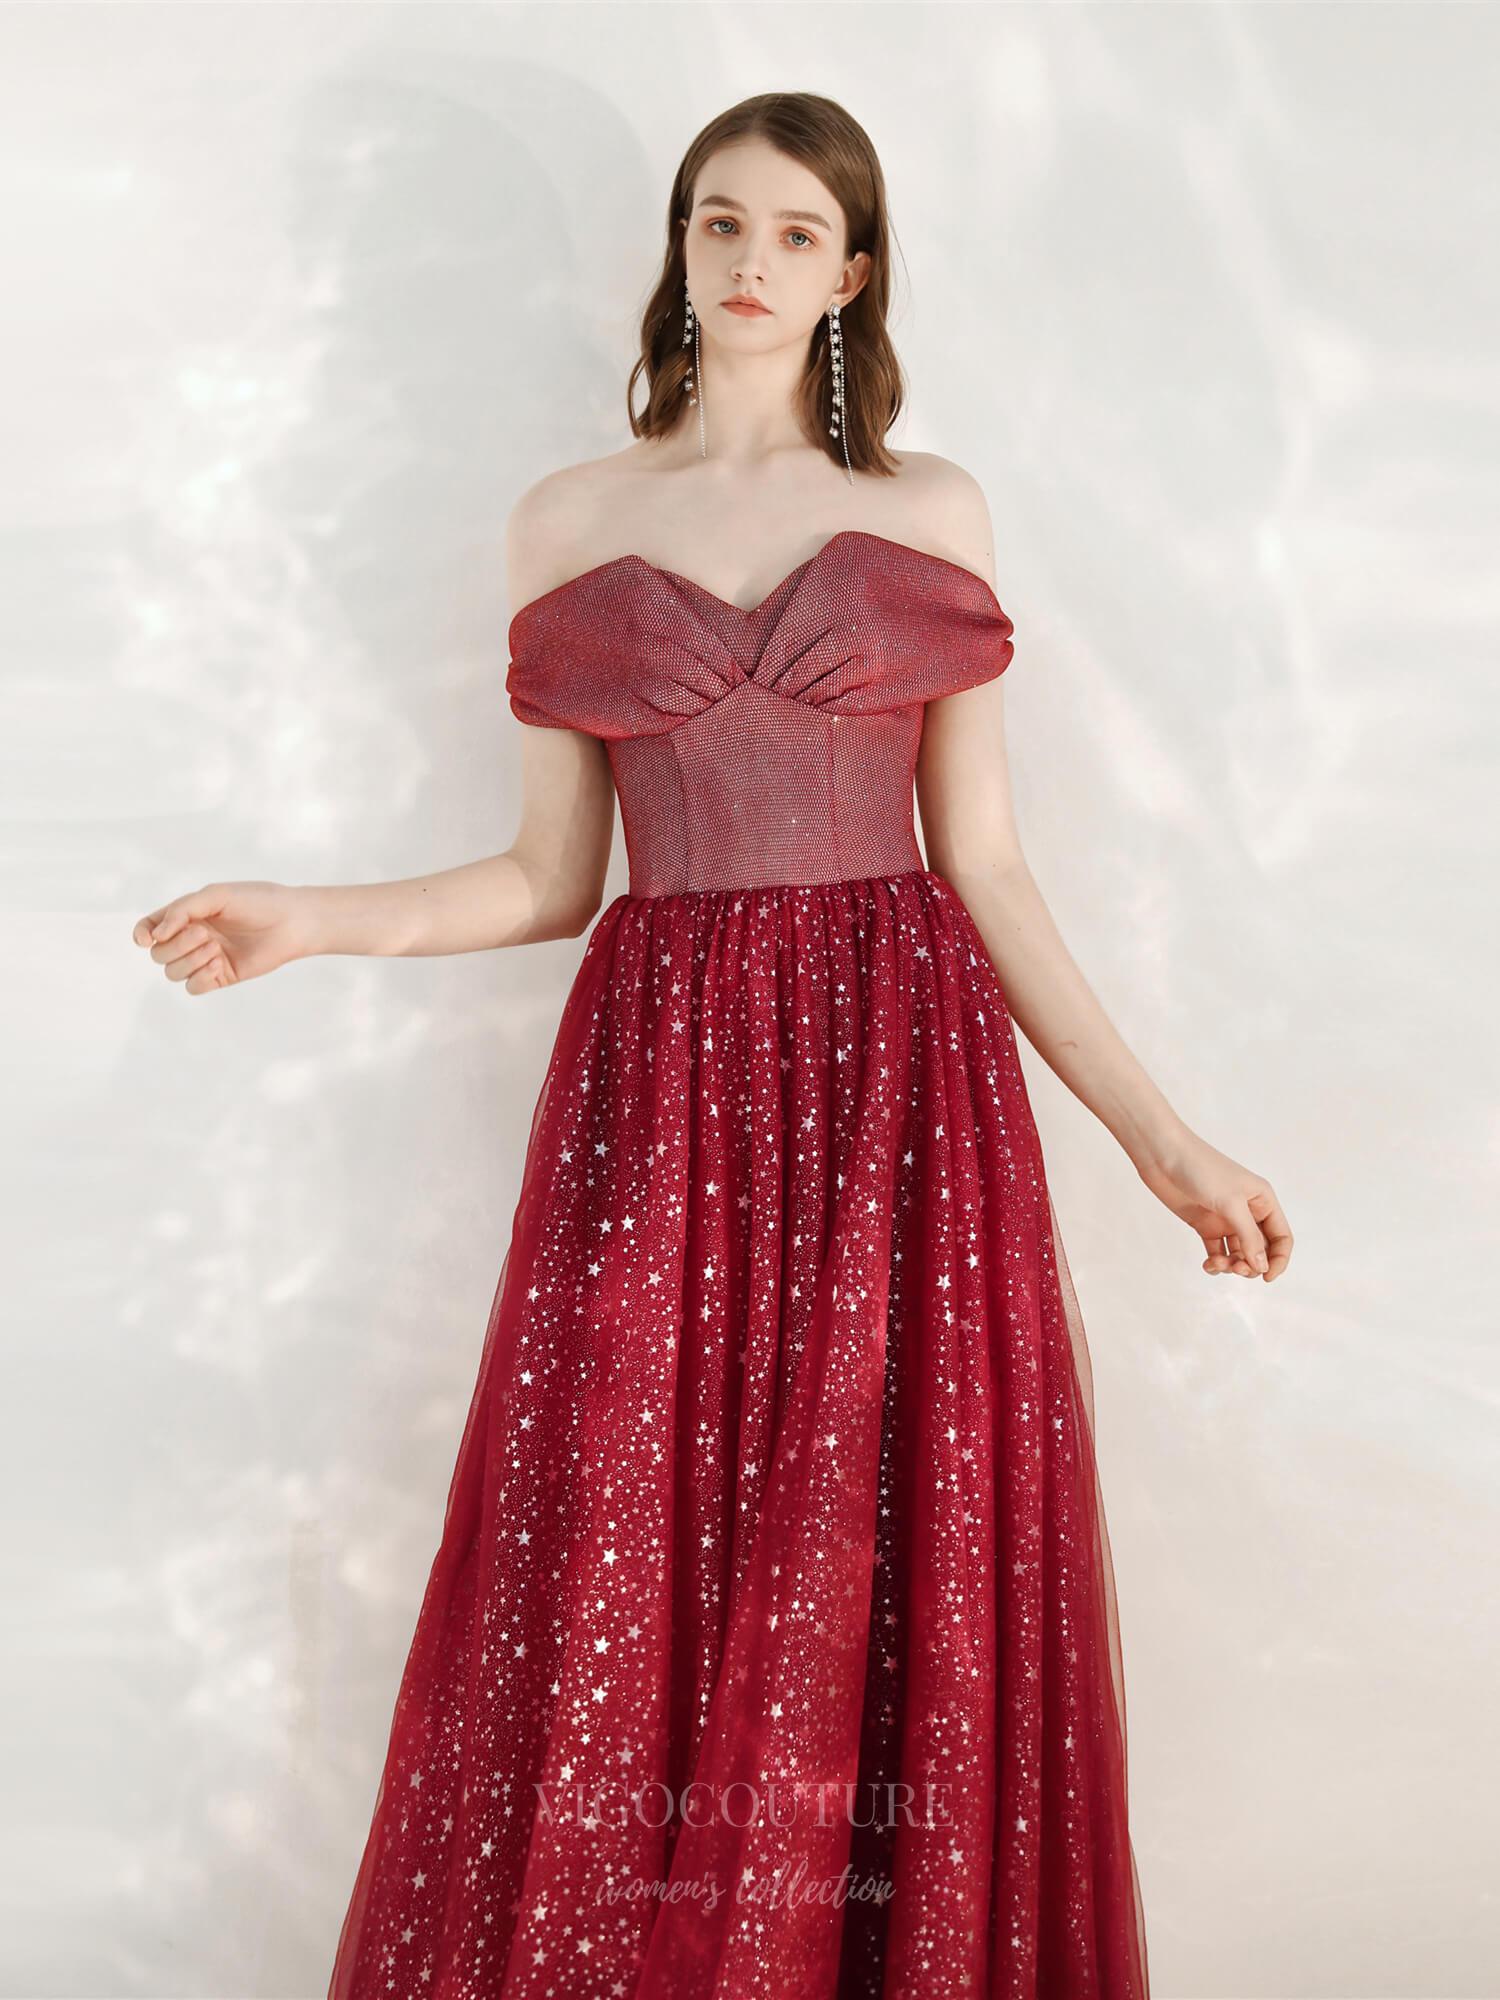 vigocouture-Red Off the Shoulder Prom Dress 20697-Prom Dresses-vigocouture-